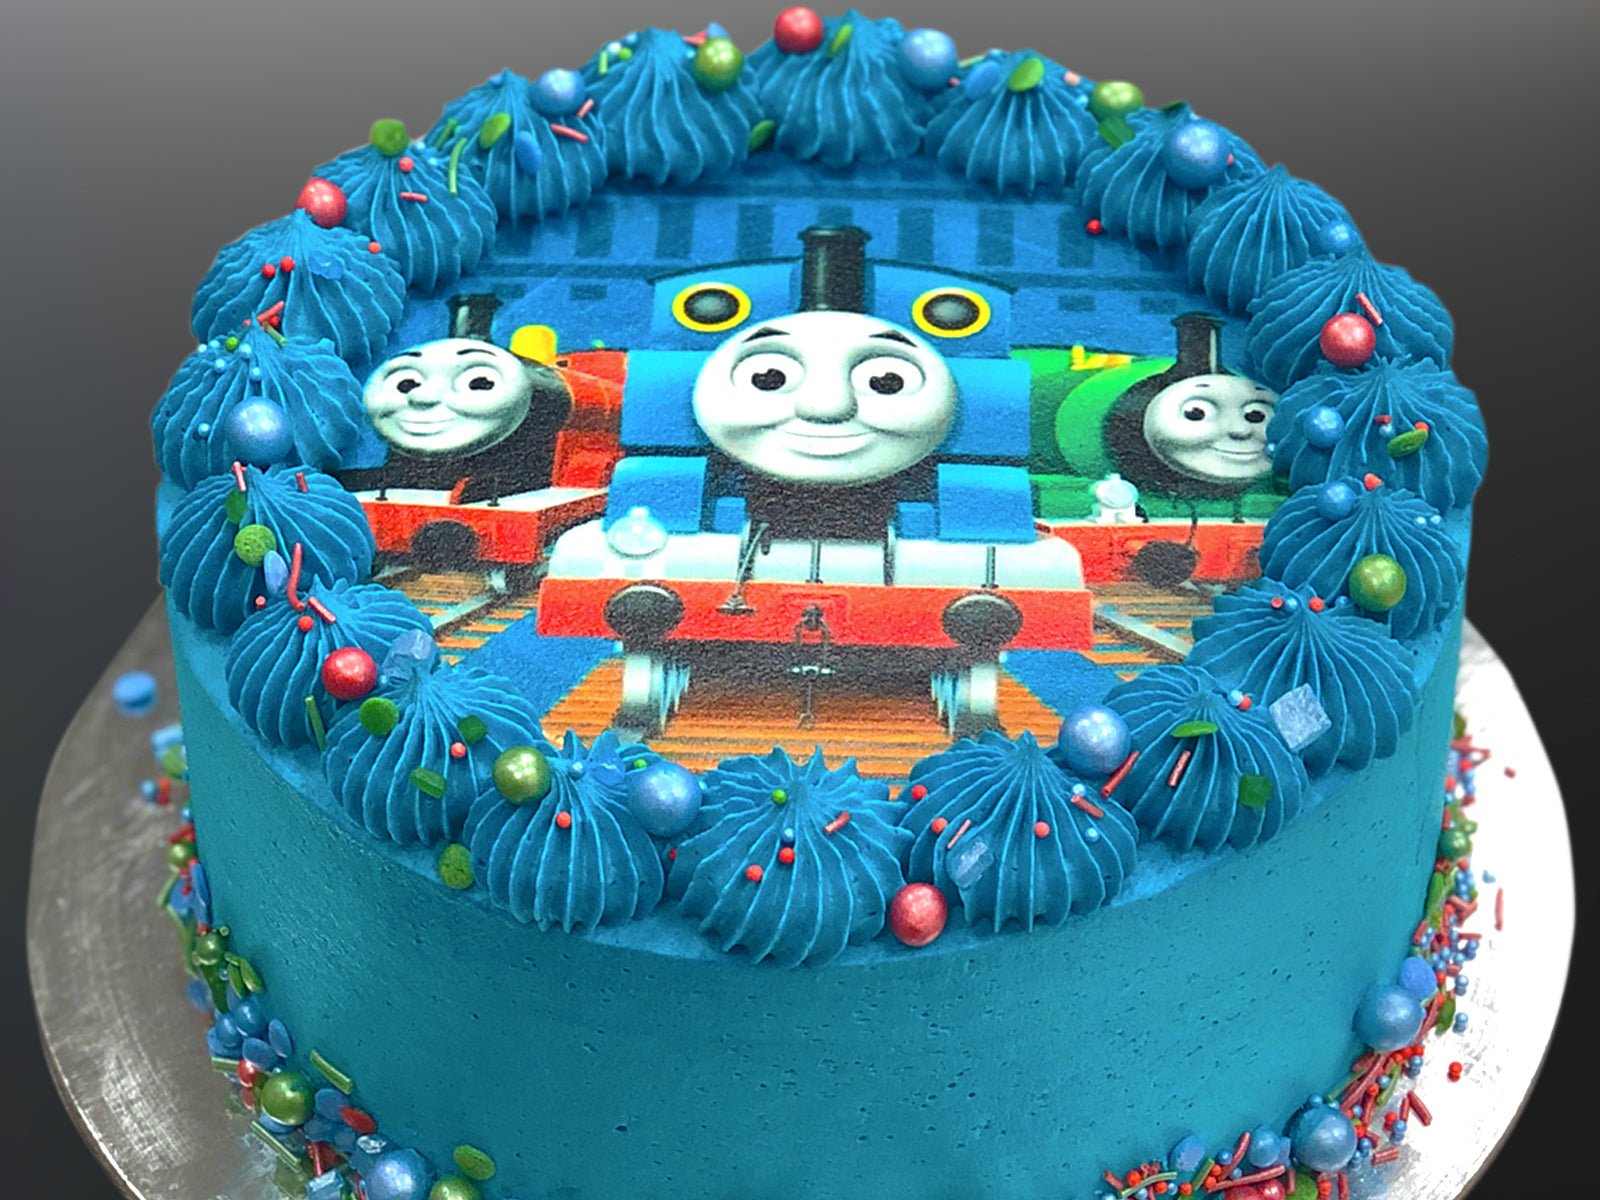 Thomas The Tank Engine Cake | Cakes & Bakes®